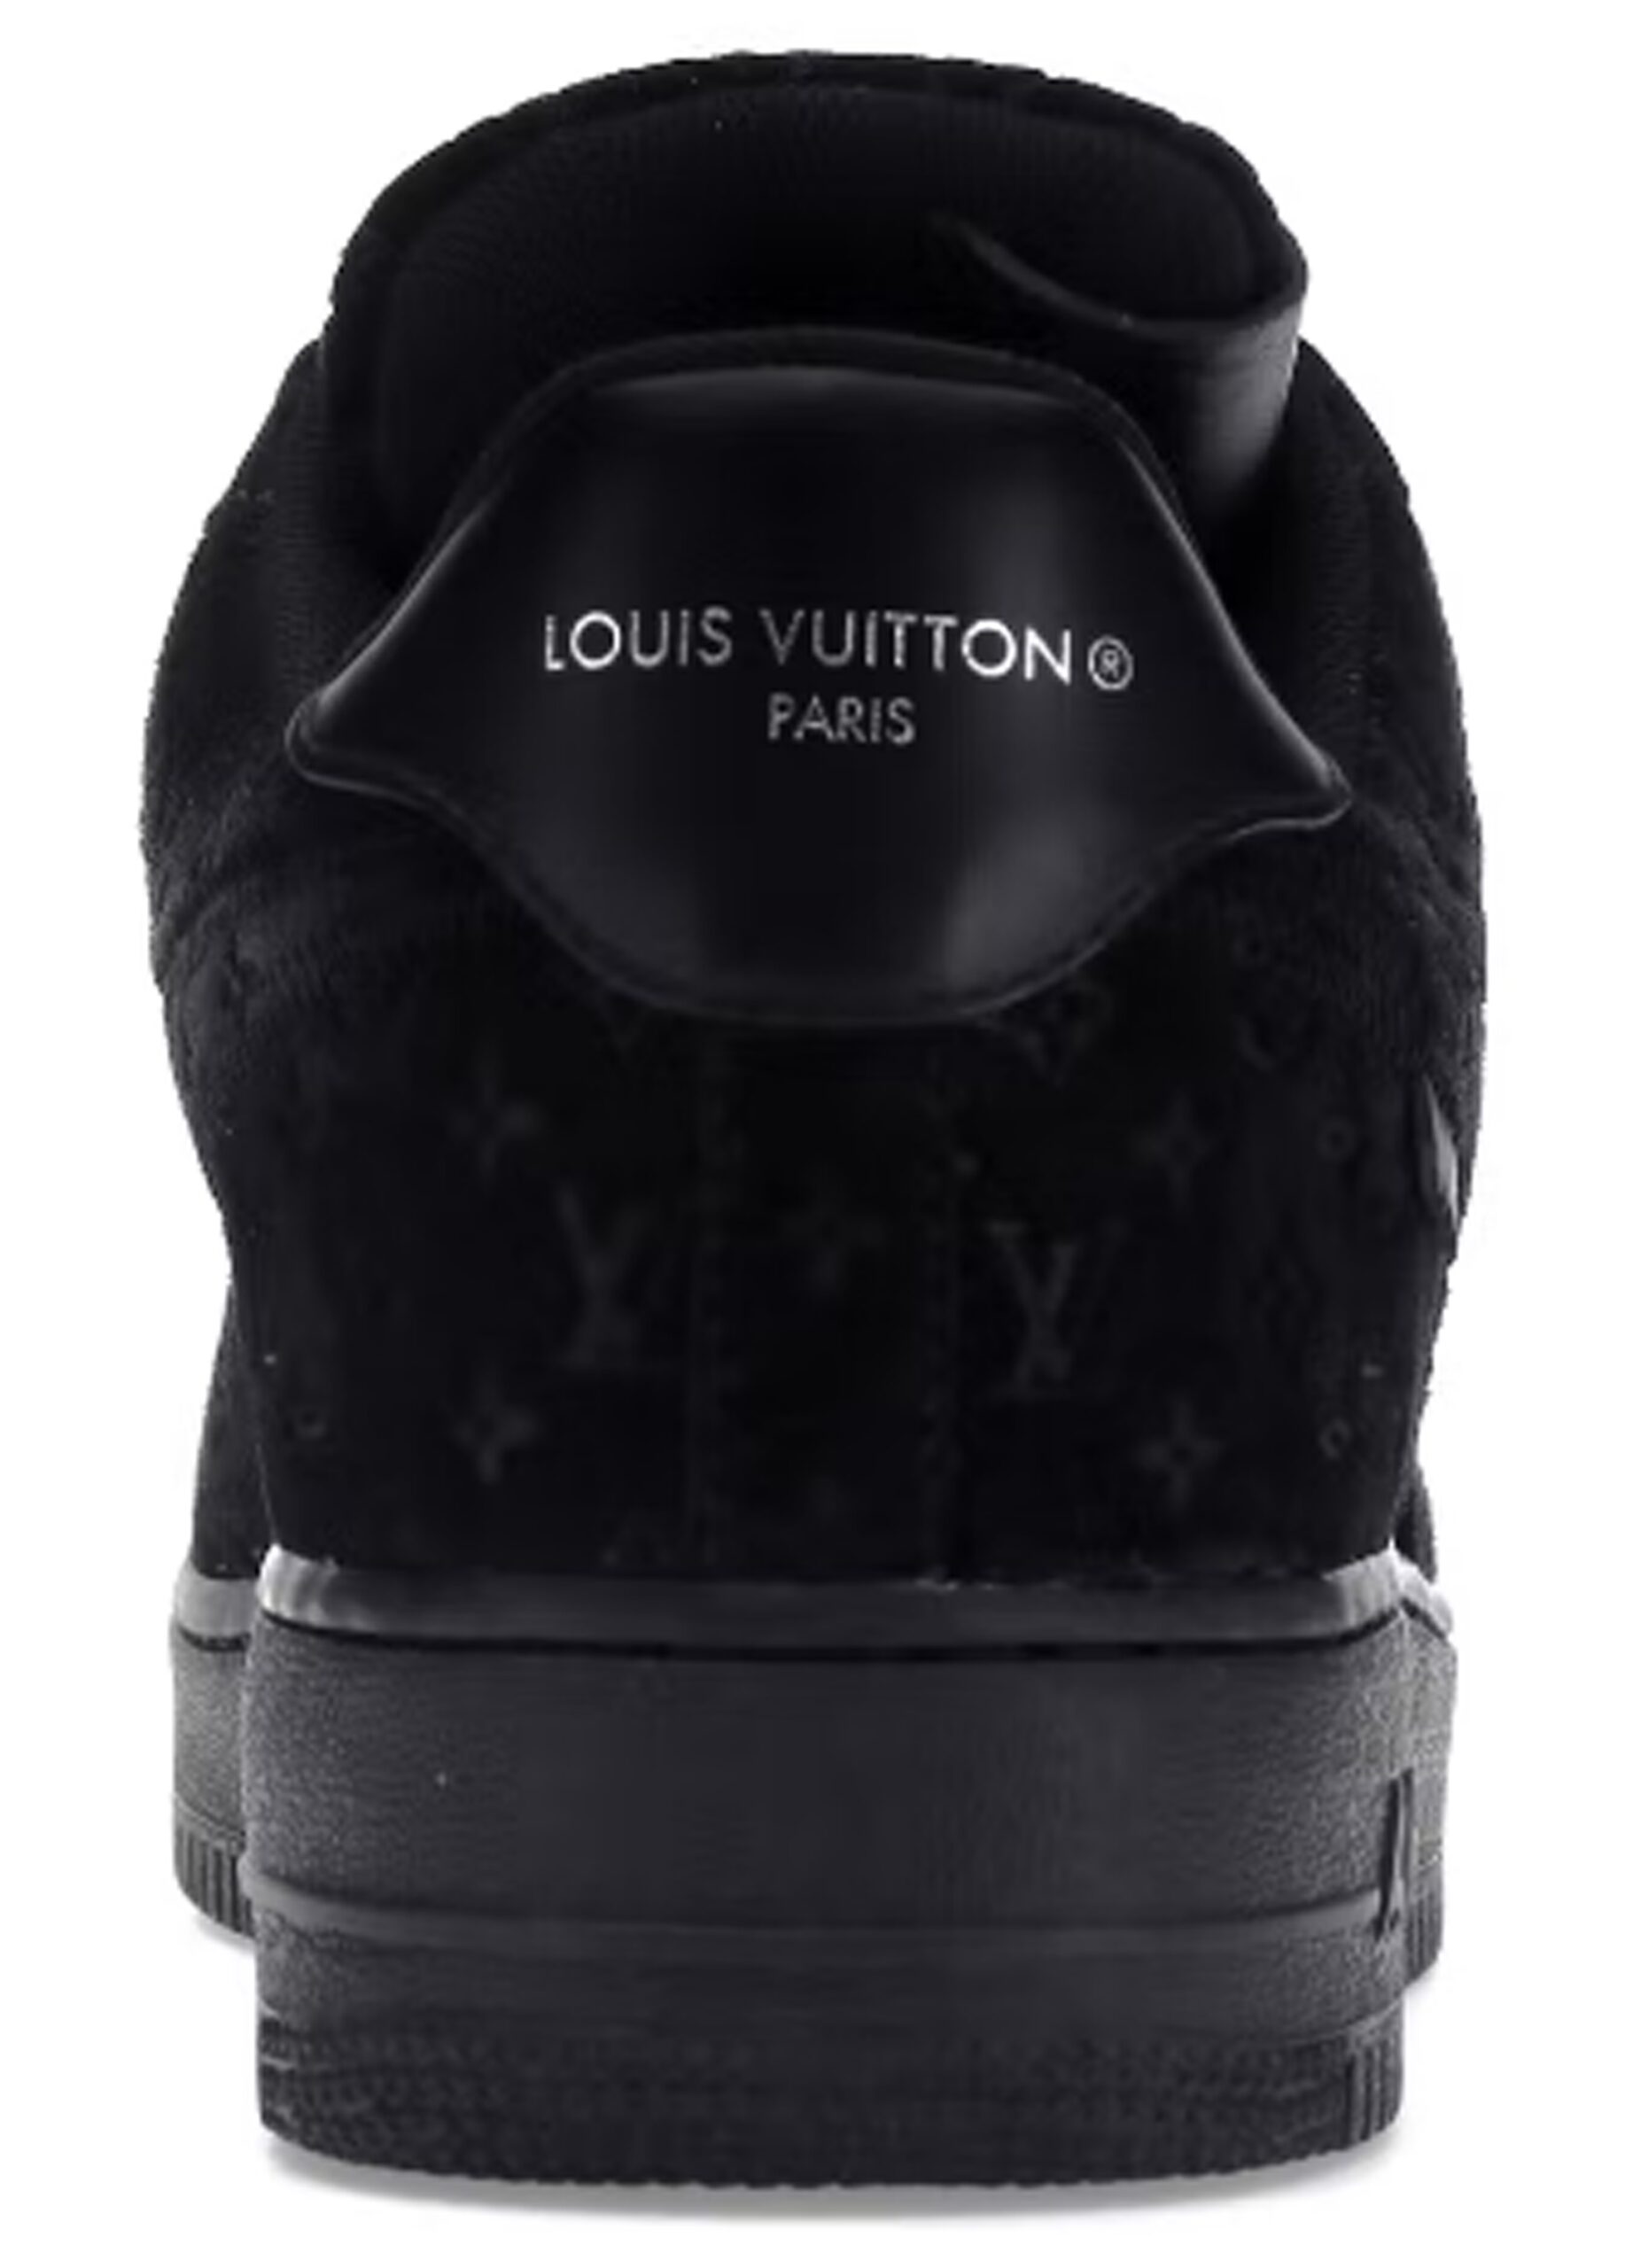 Louis Vuitton X Air Force 1 Low 'Triple Black' - Nike - 1A9V BLACK LOW -  black/black/anthracite